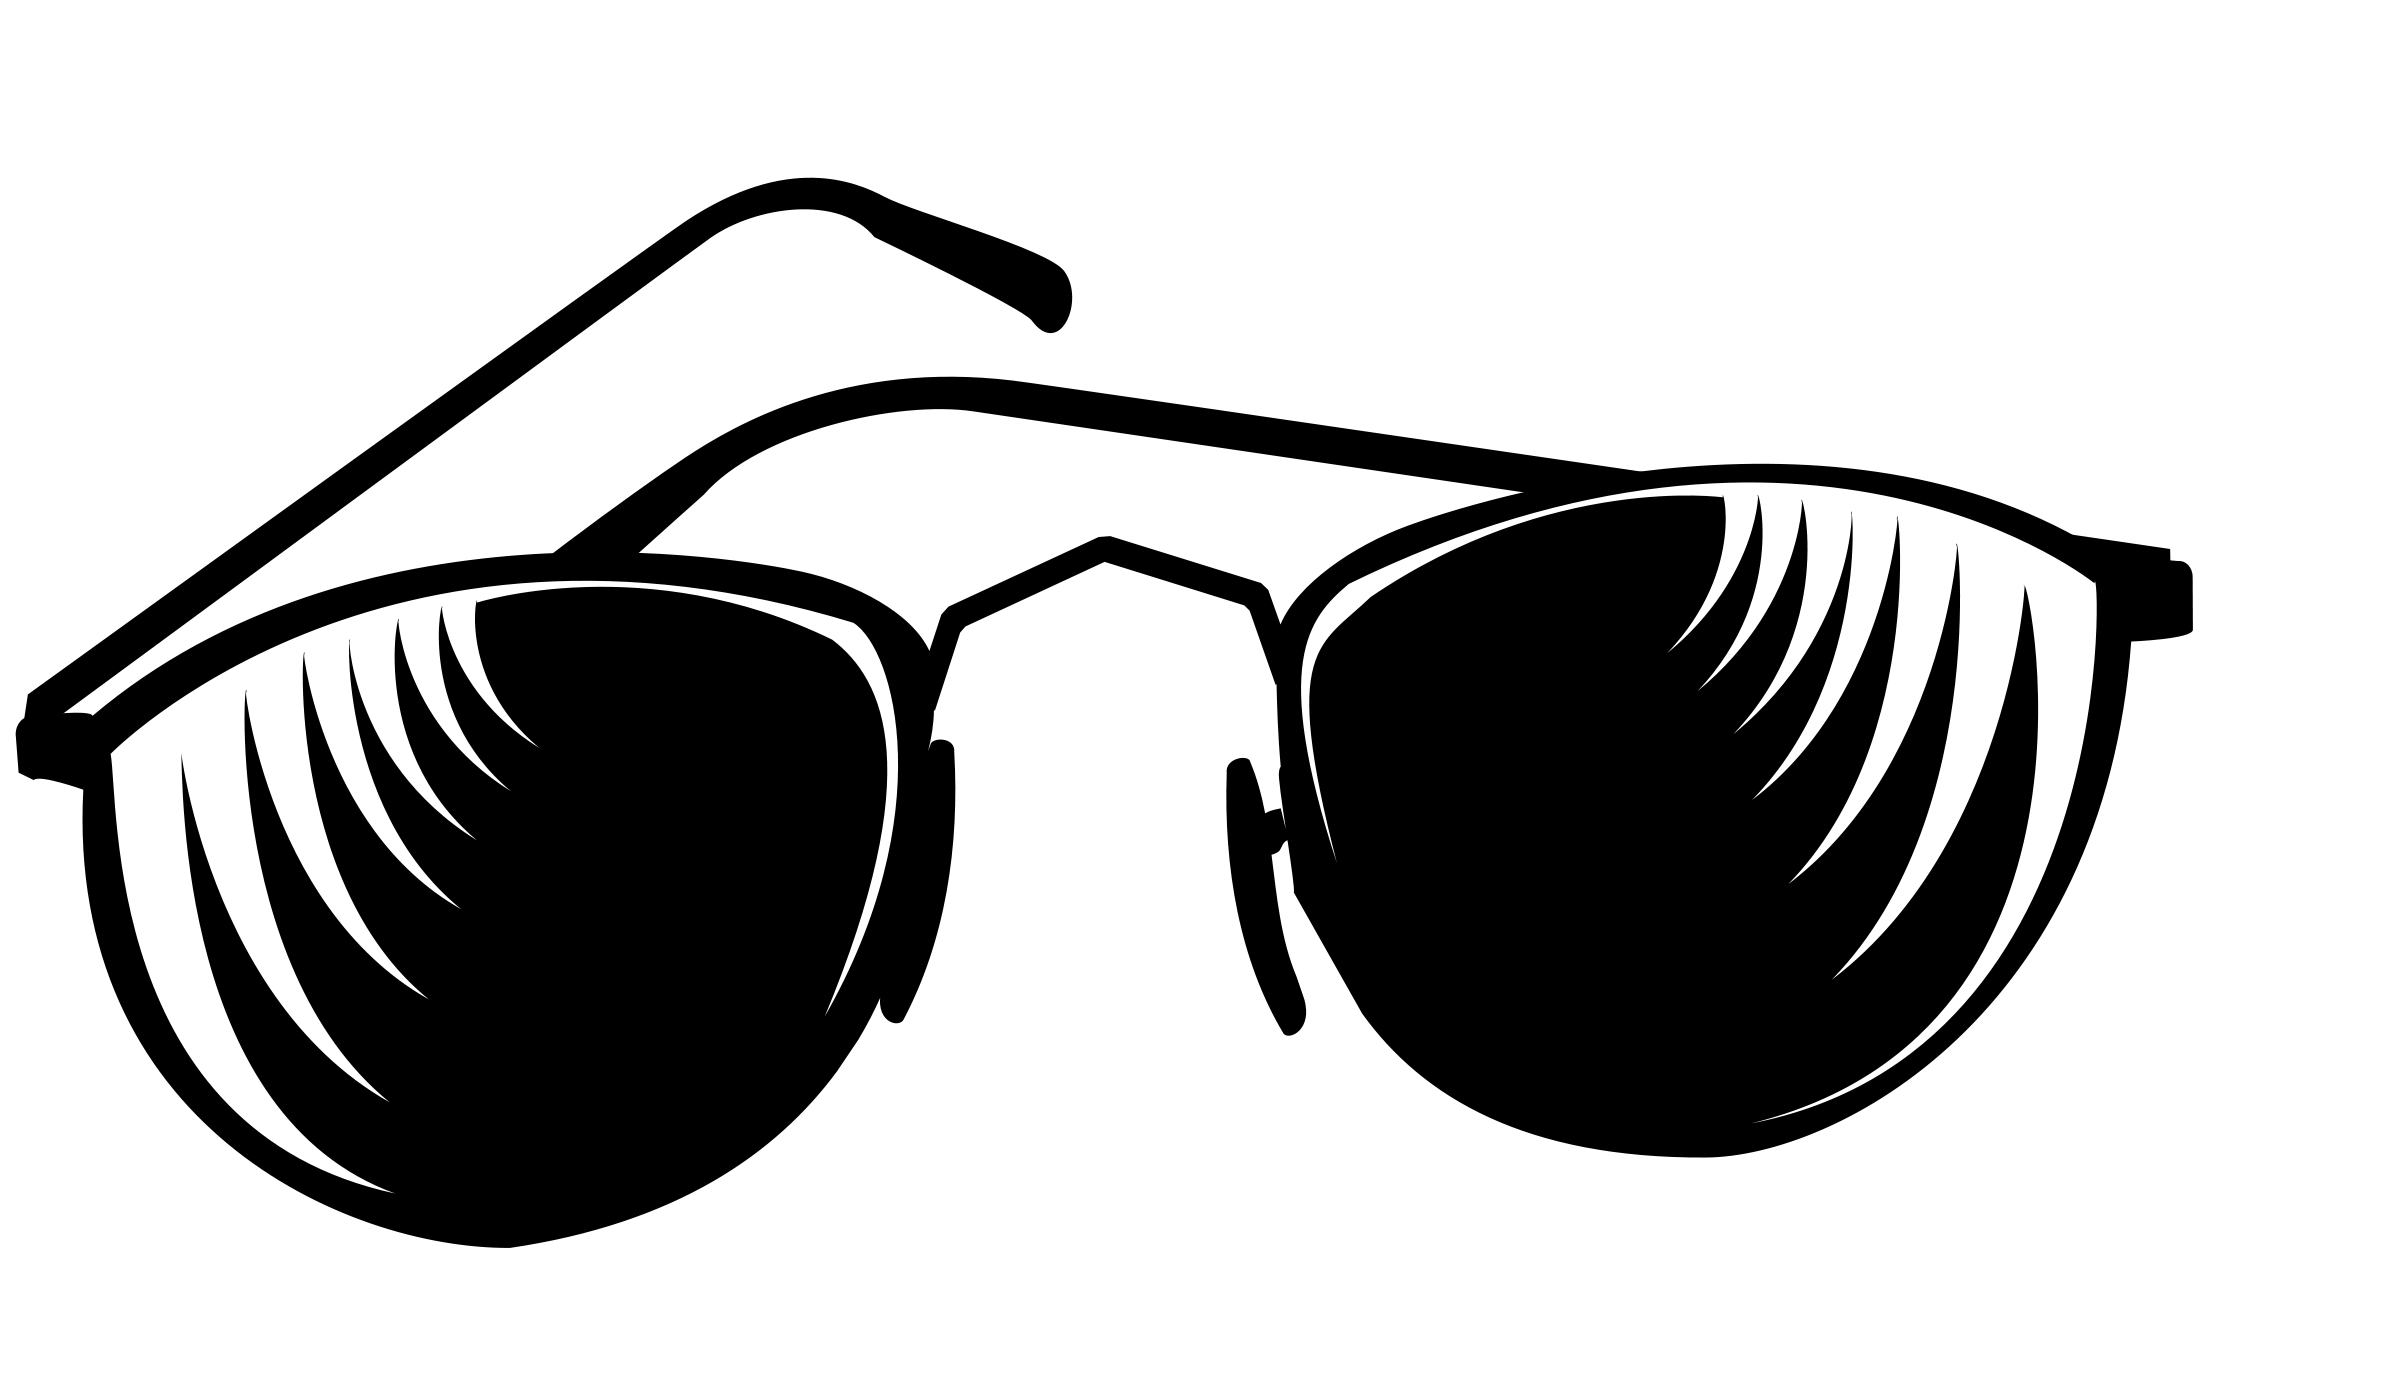 Sunglasses glasses clip art 2 image - Cliparting.com